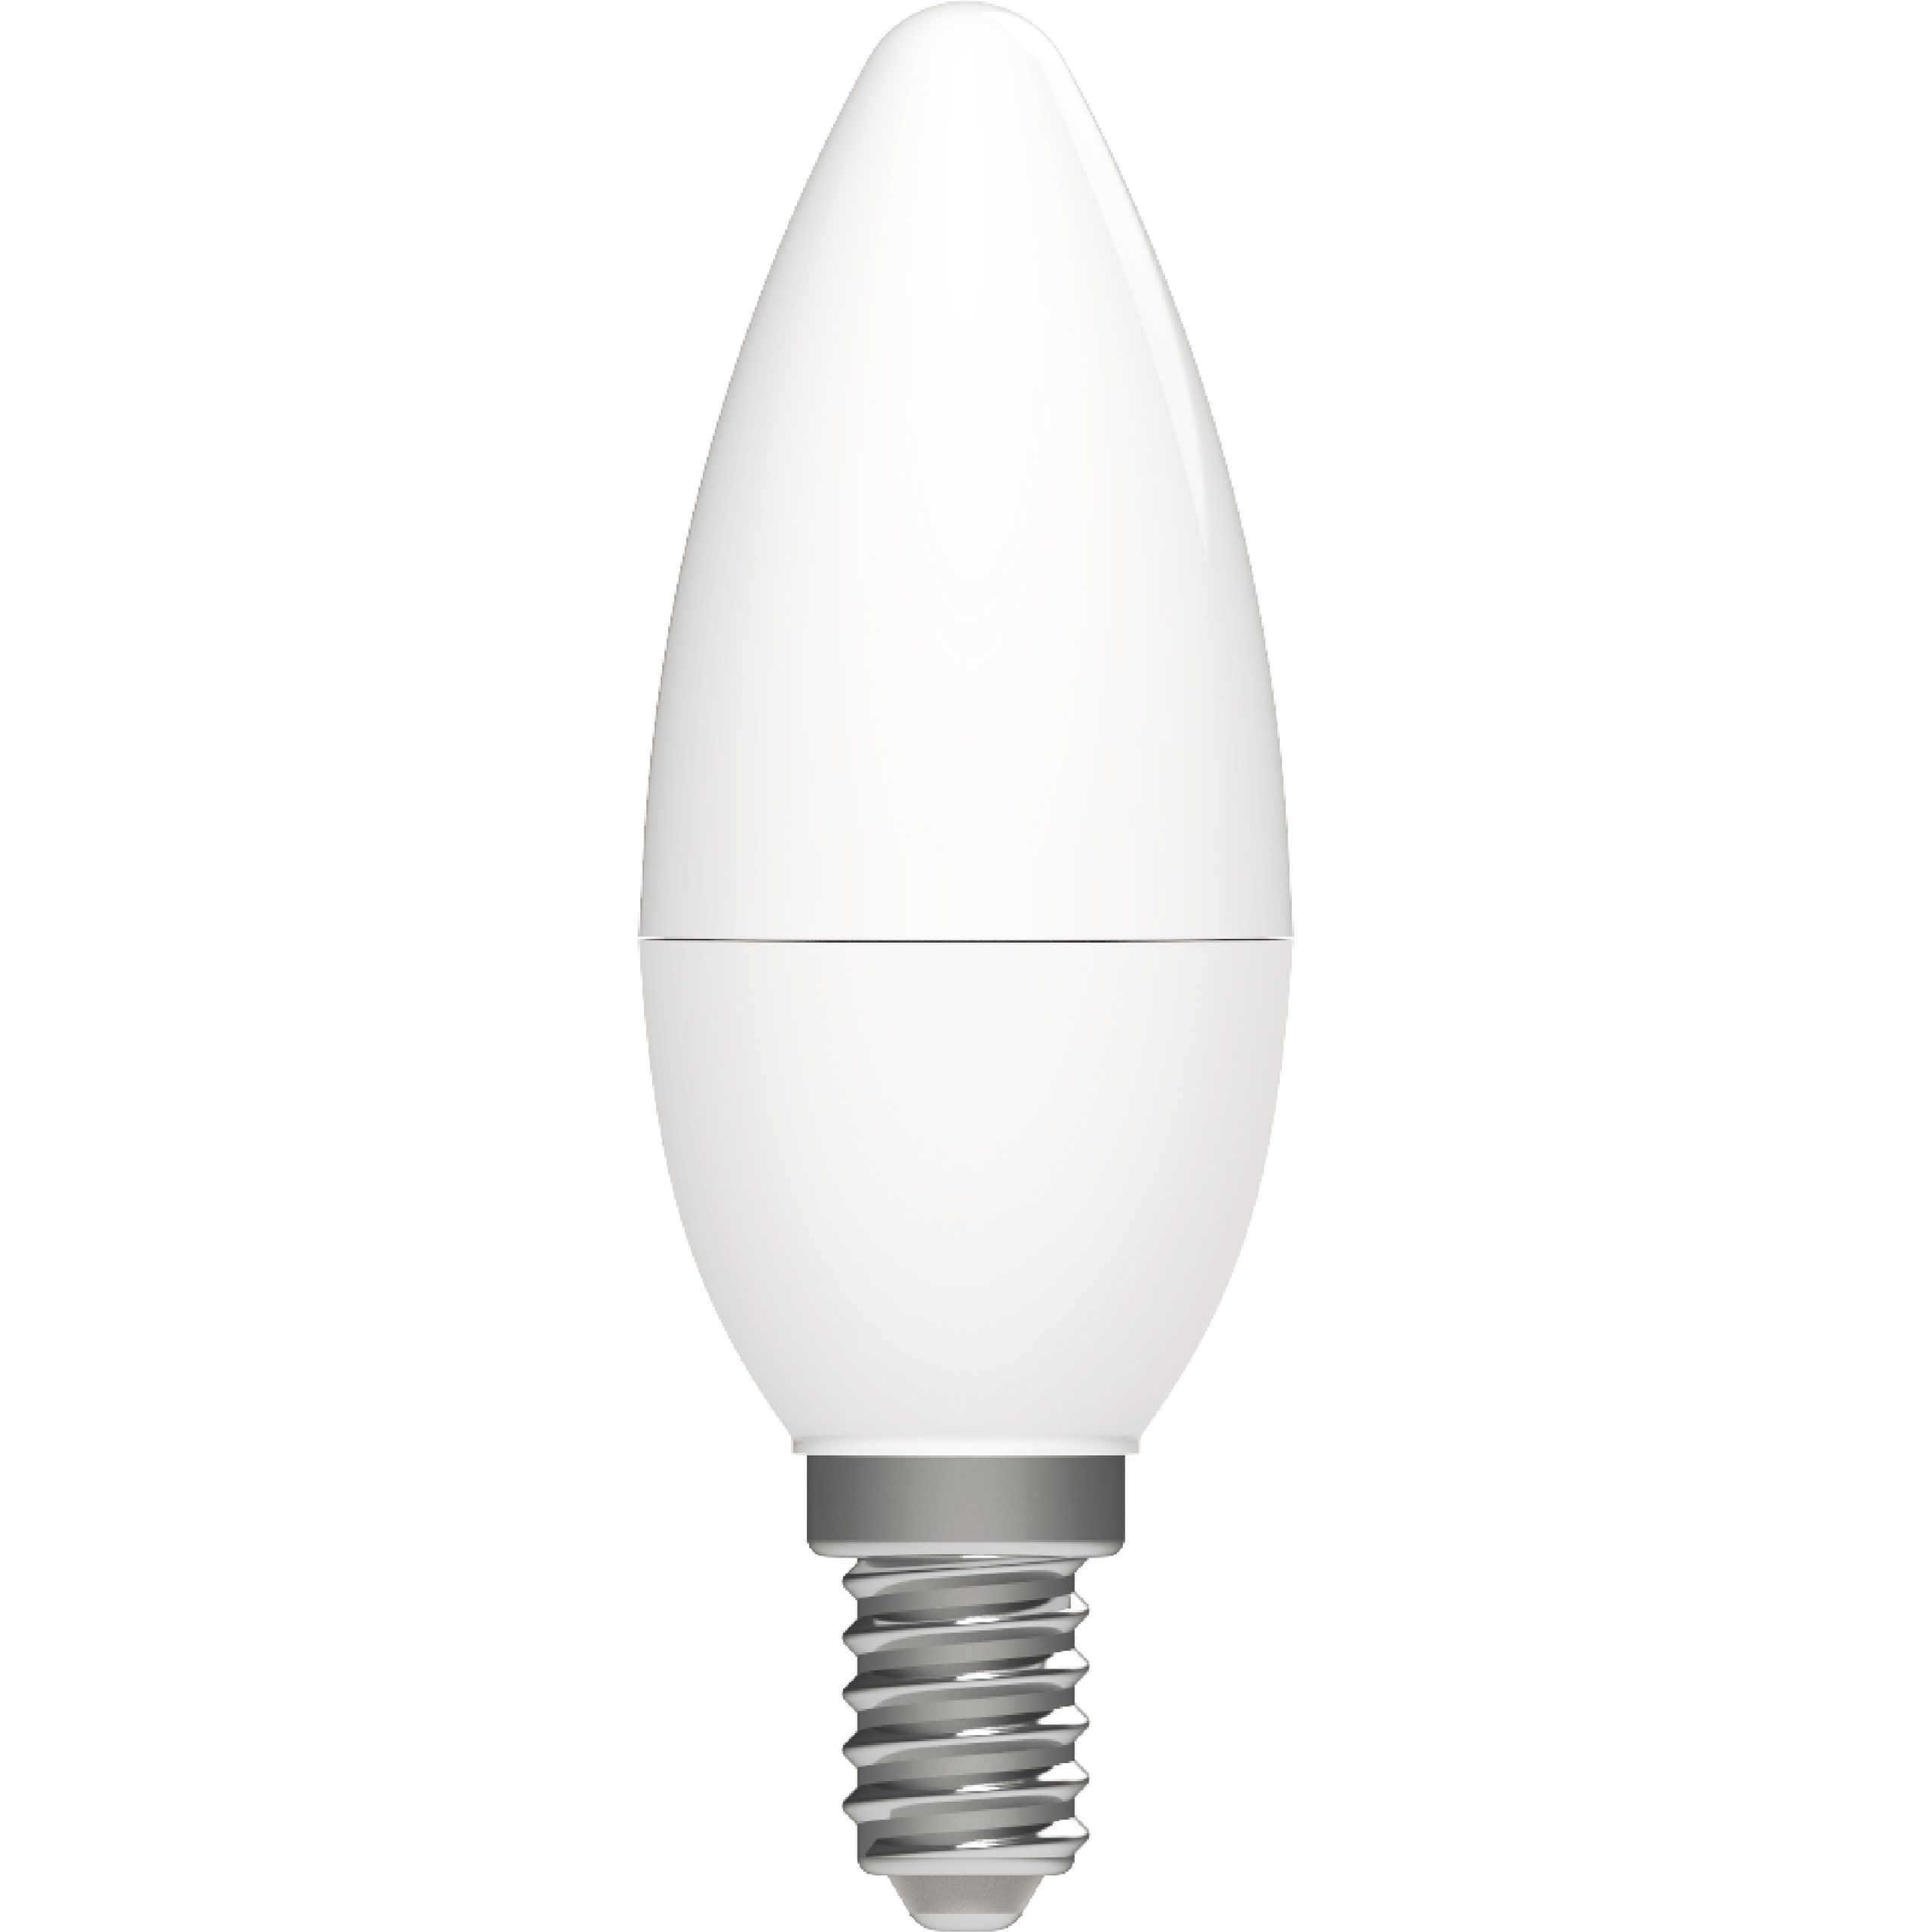 light A60 Birne, - LED LED-Leuchtmittel 0620163 2,2W E14, warmweiß LED's 50.000h Haltbarkeit Klar E27